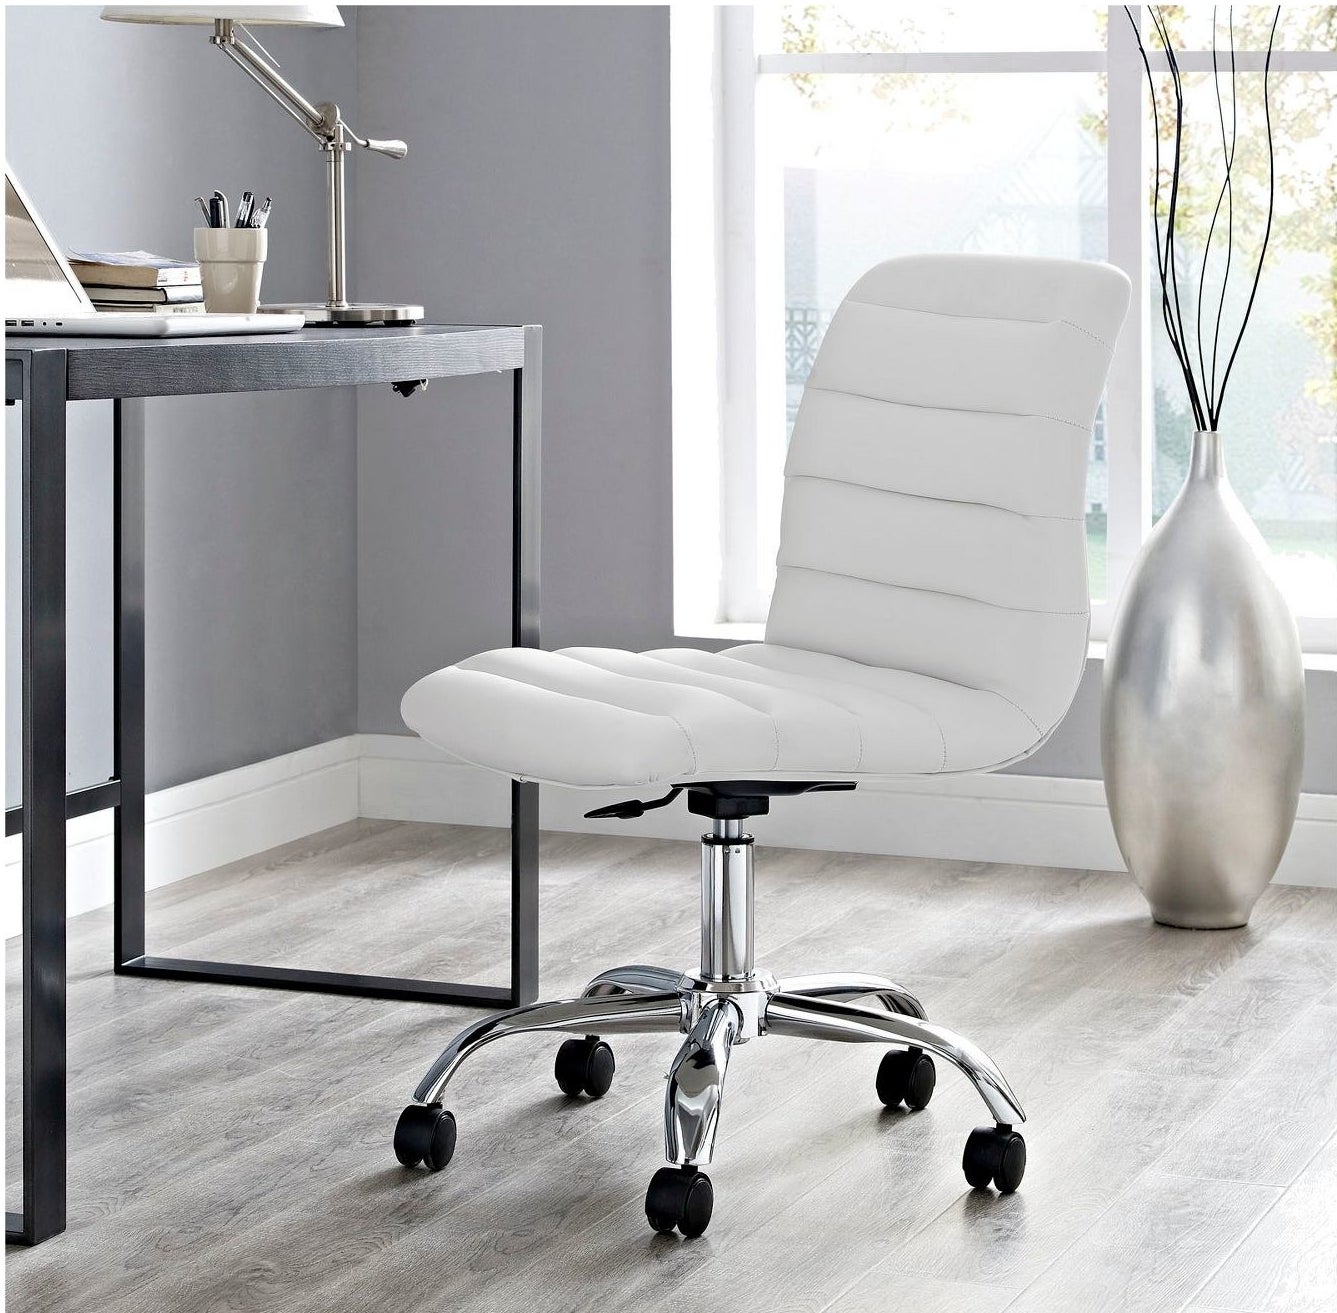 A white desk chair in a home